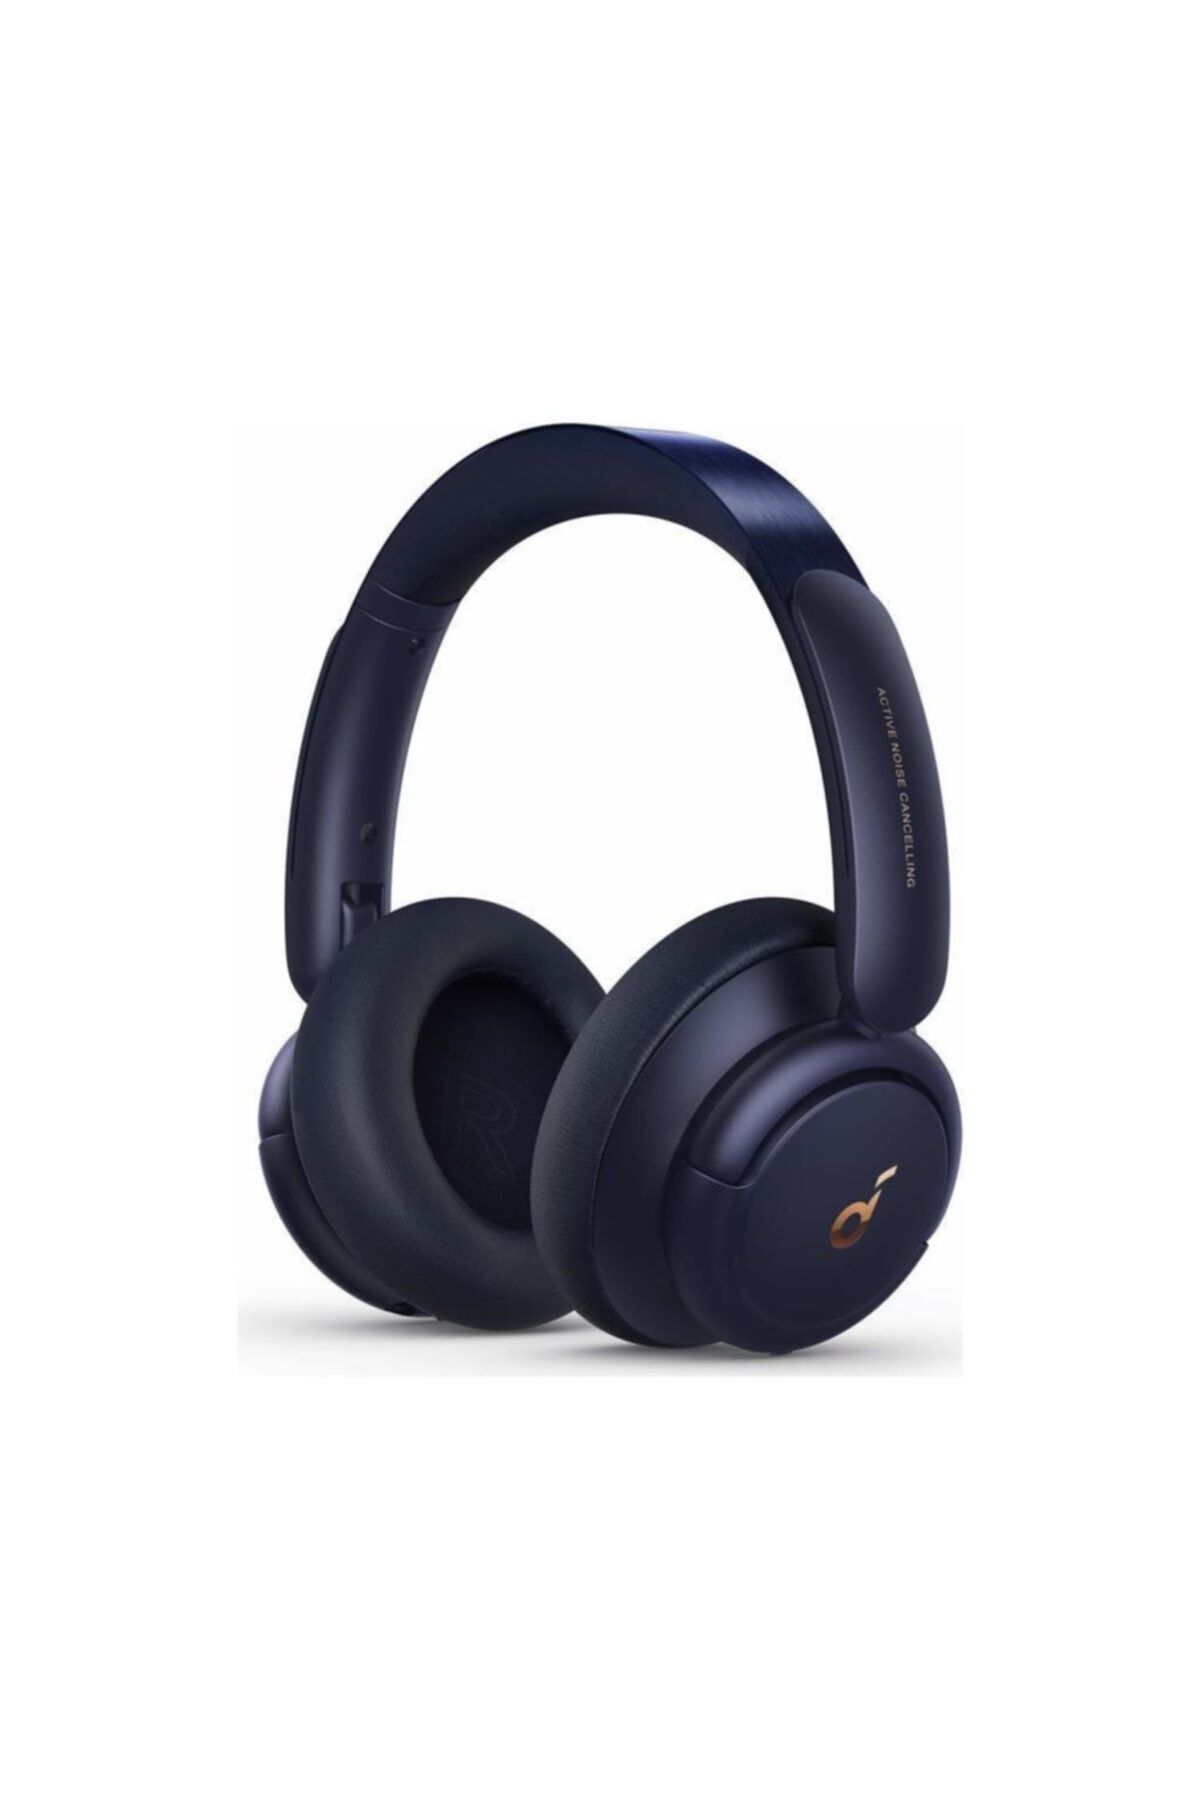 Anker Soundcore Life Q30 Anc Bluetooth Kulaklık Lacivert (resmi Distribütör Garantili)